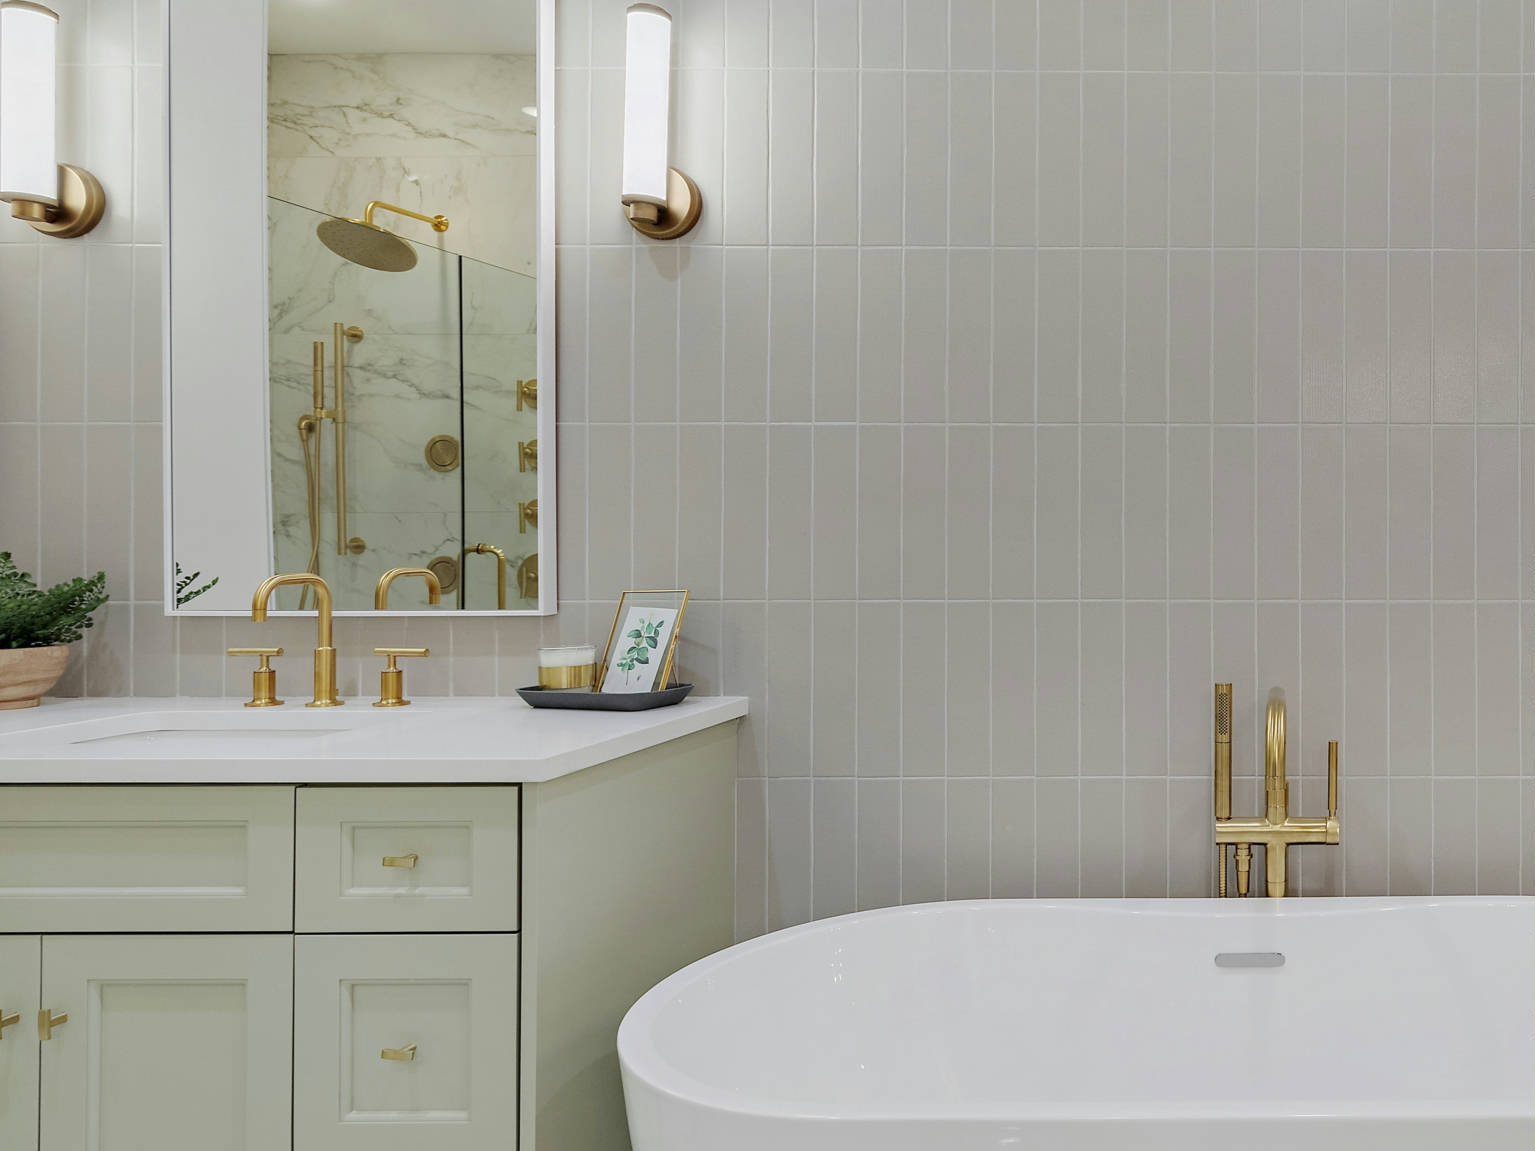 Bathroom textured tiles | Adex USA